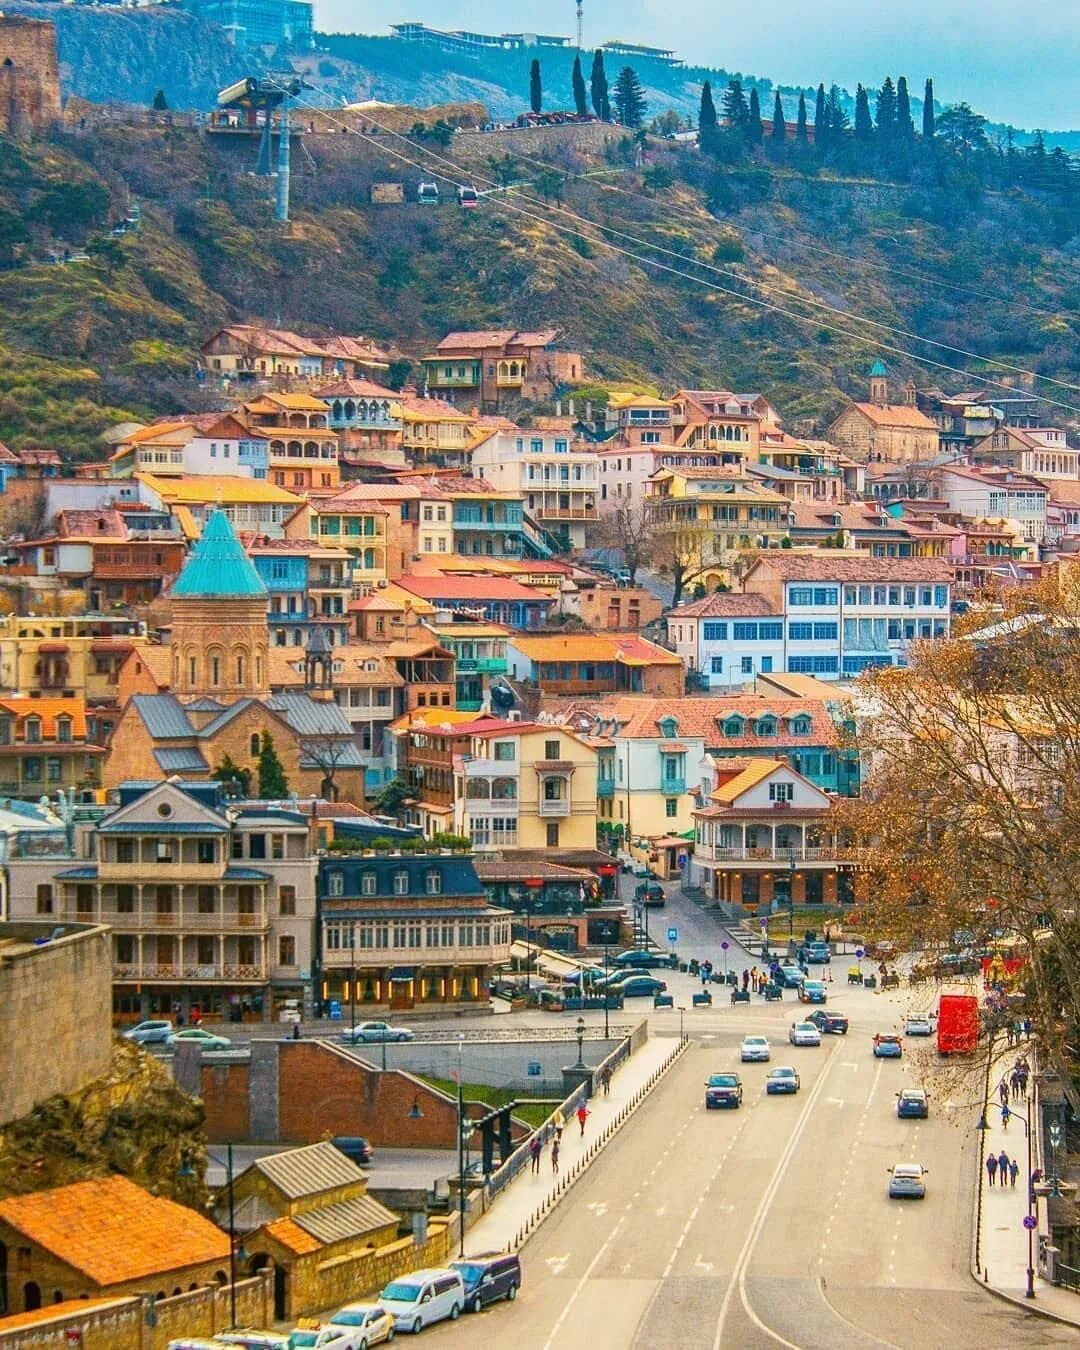 Где город тбилиси. Тбилиси. Грузия столица 2021. Грузия город Тбилиси. Столица Грузии Тифлис.